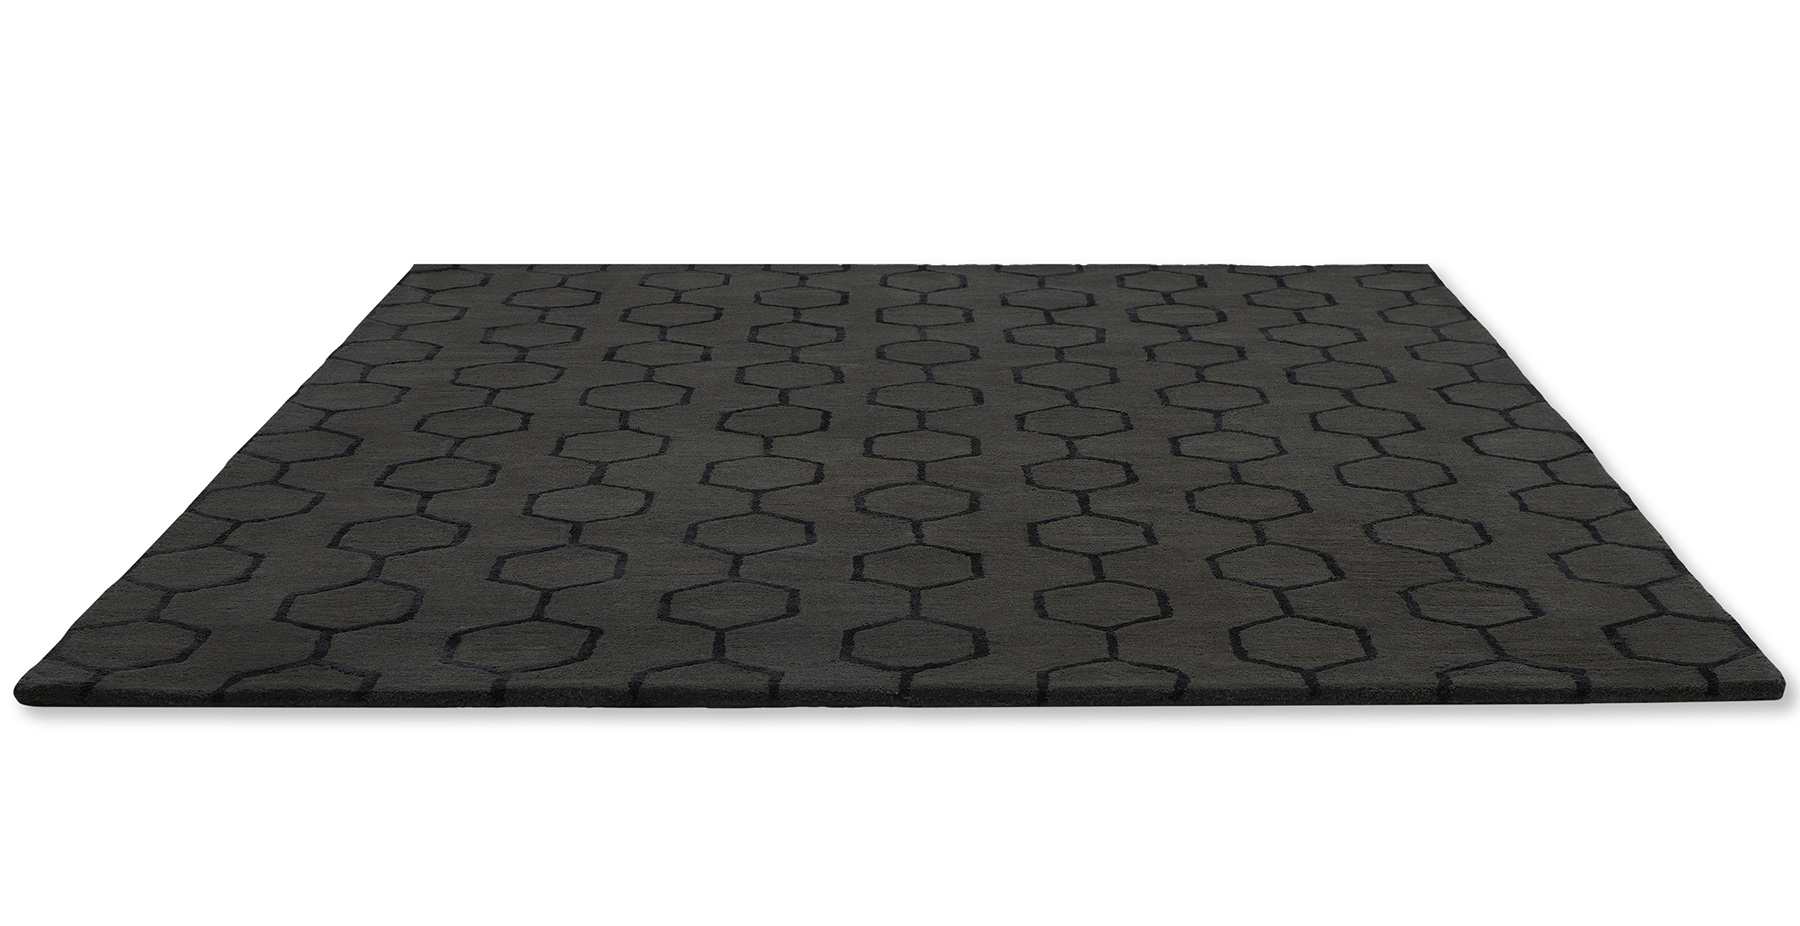 Geometric Noir Rug ☞ Size: 6' 7" x 9' 2" (200 x 280 cm)